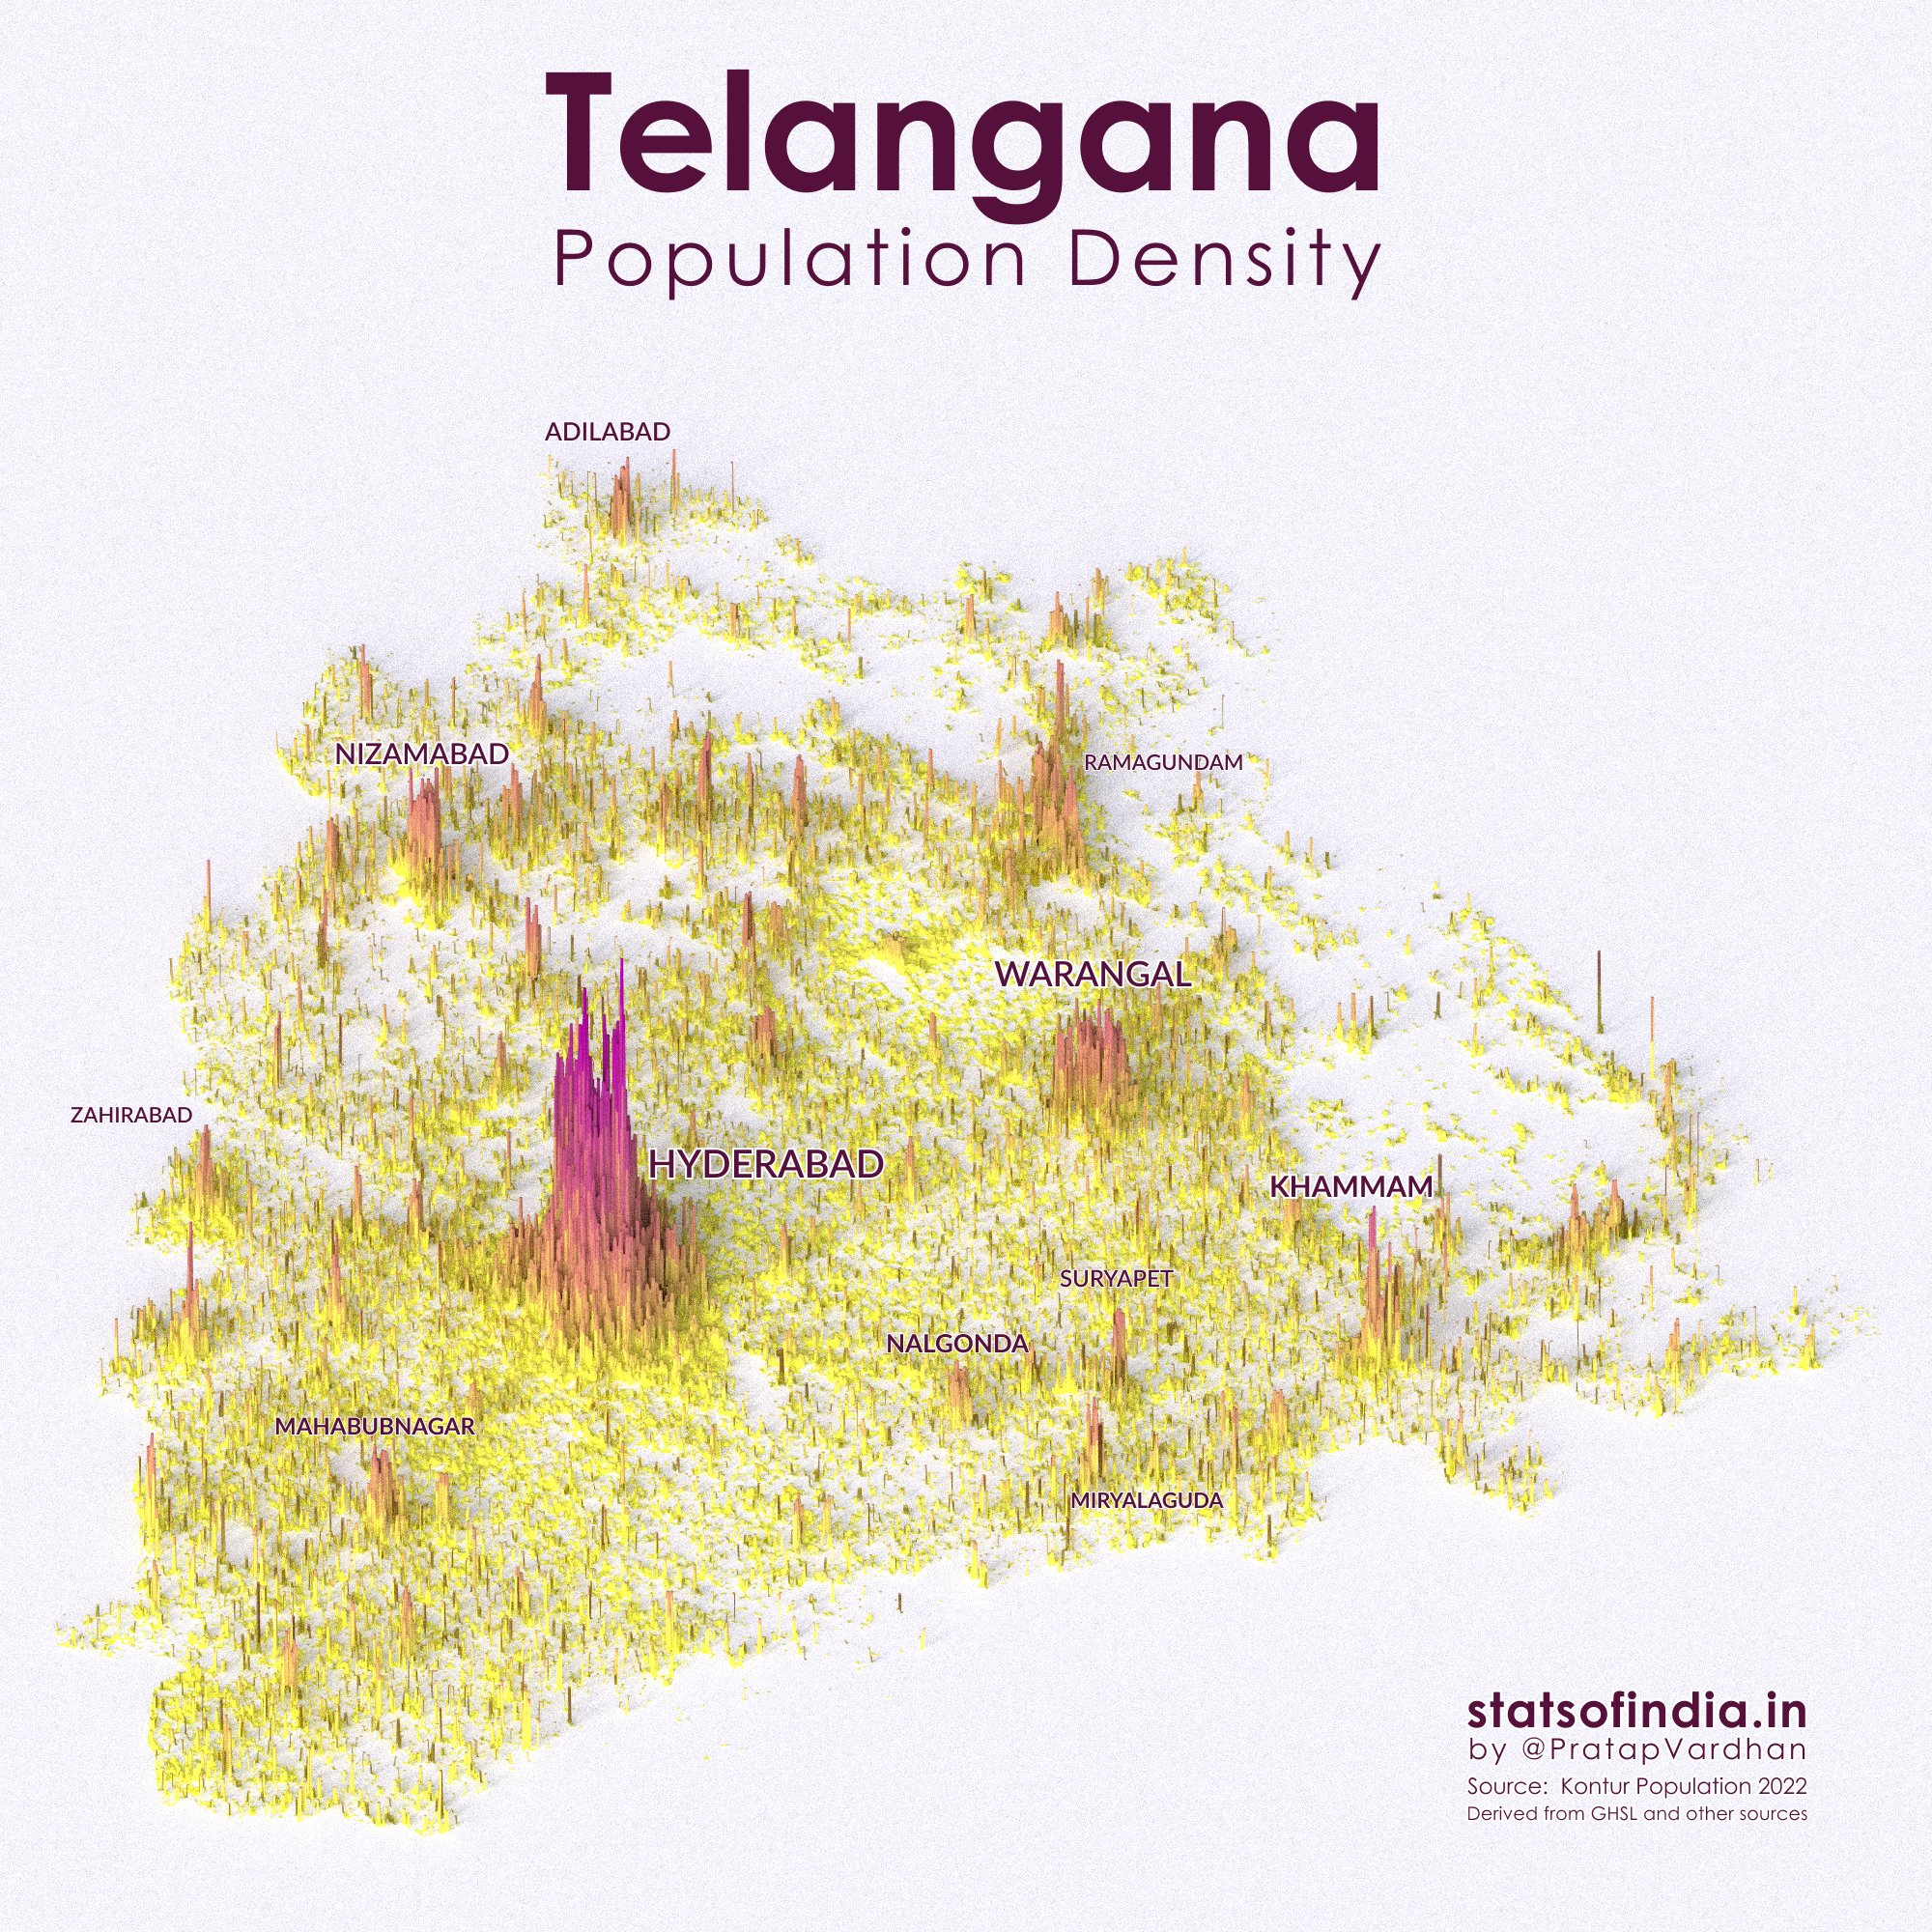 Stats of India on Twitter "Population density map of Telangana, India